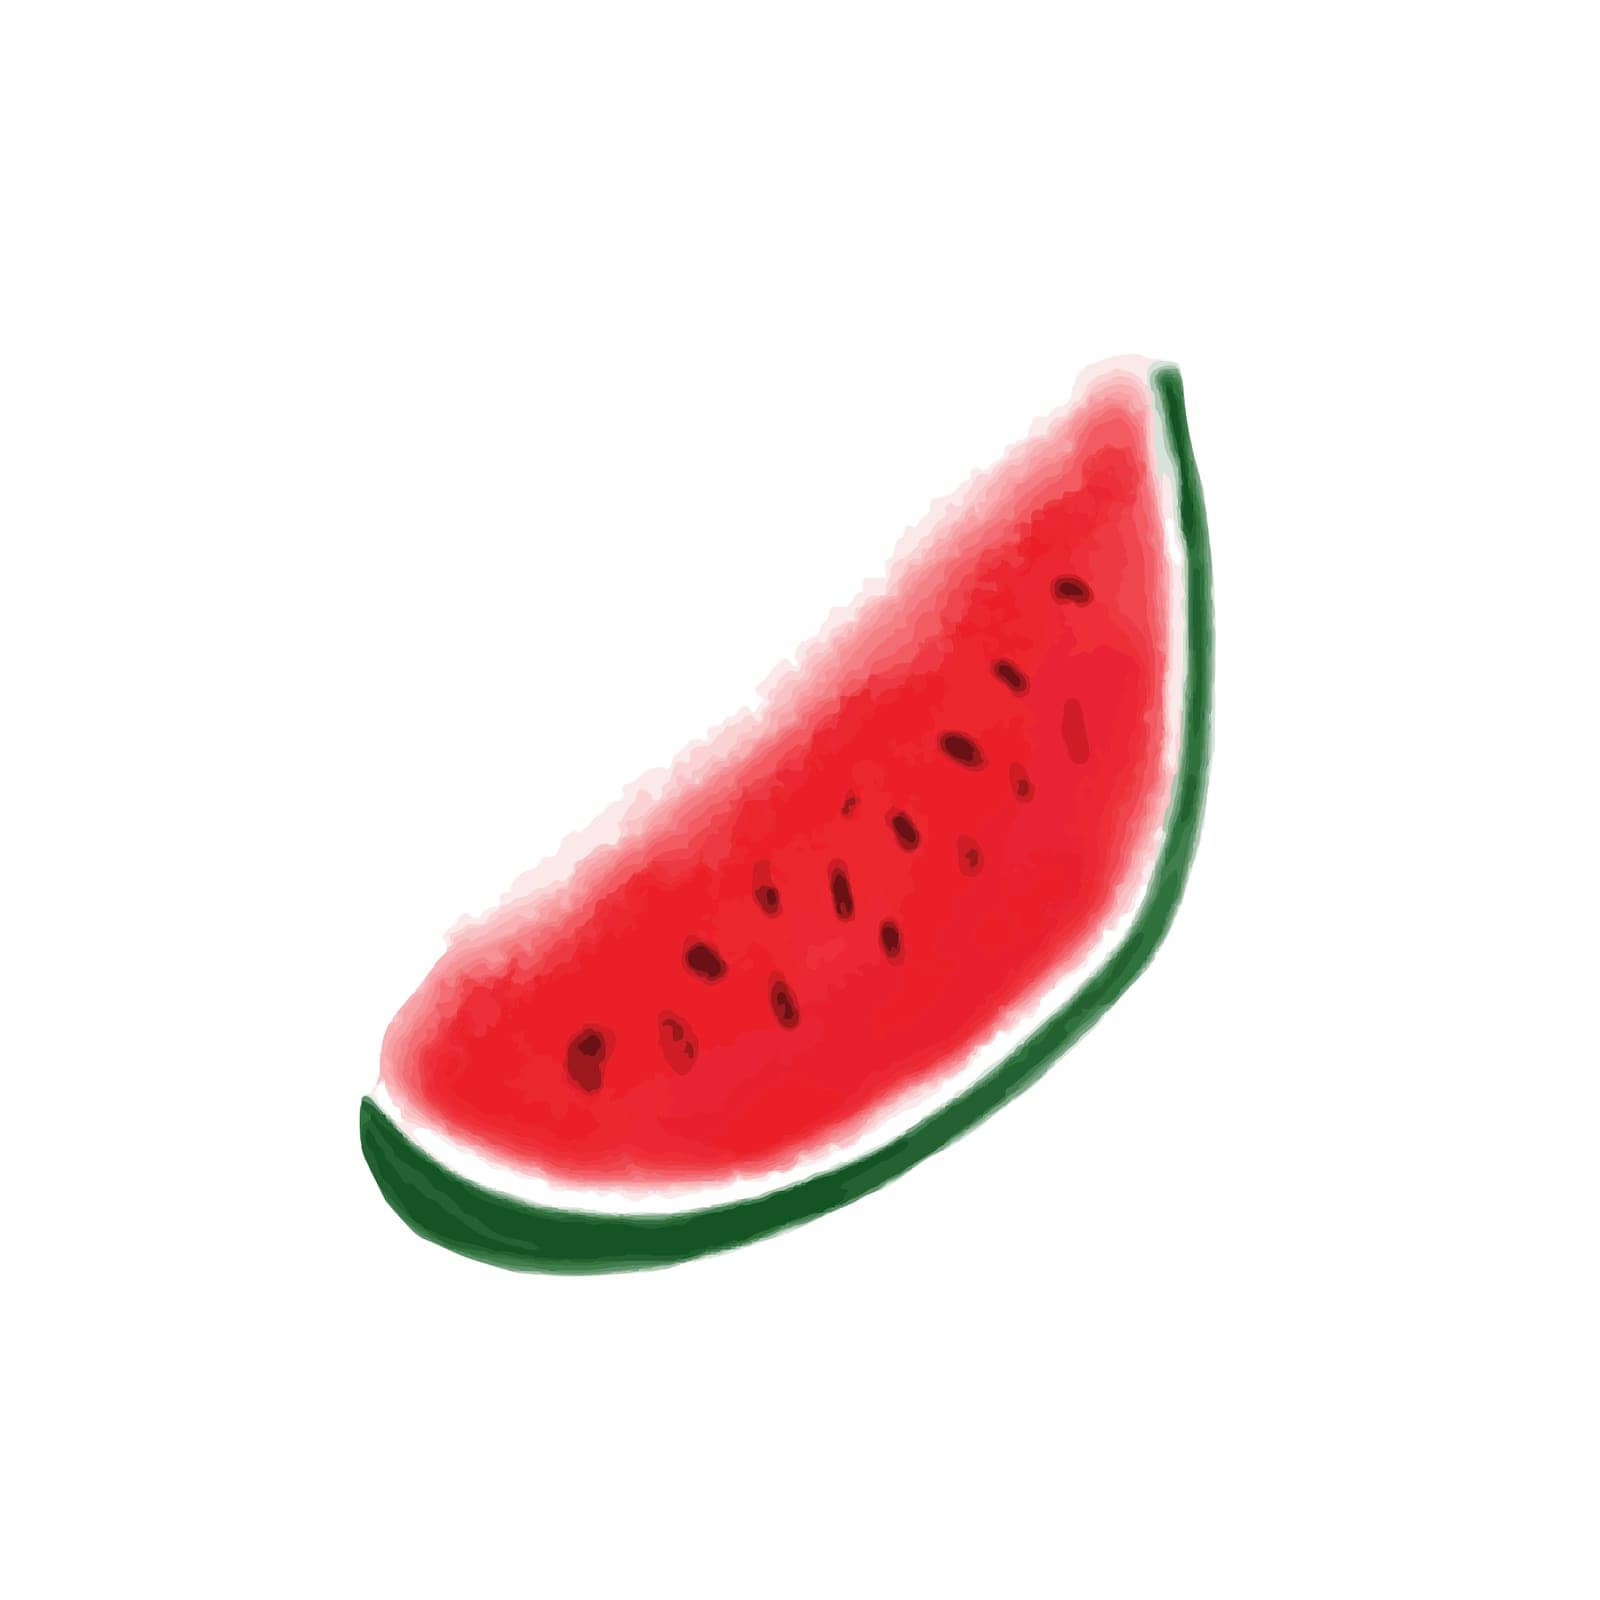 Watermelon clip art watercolor